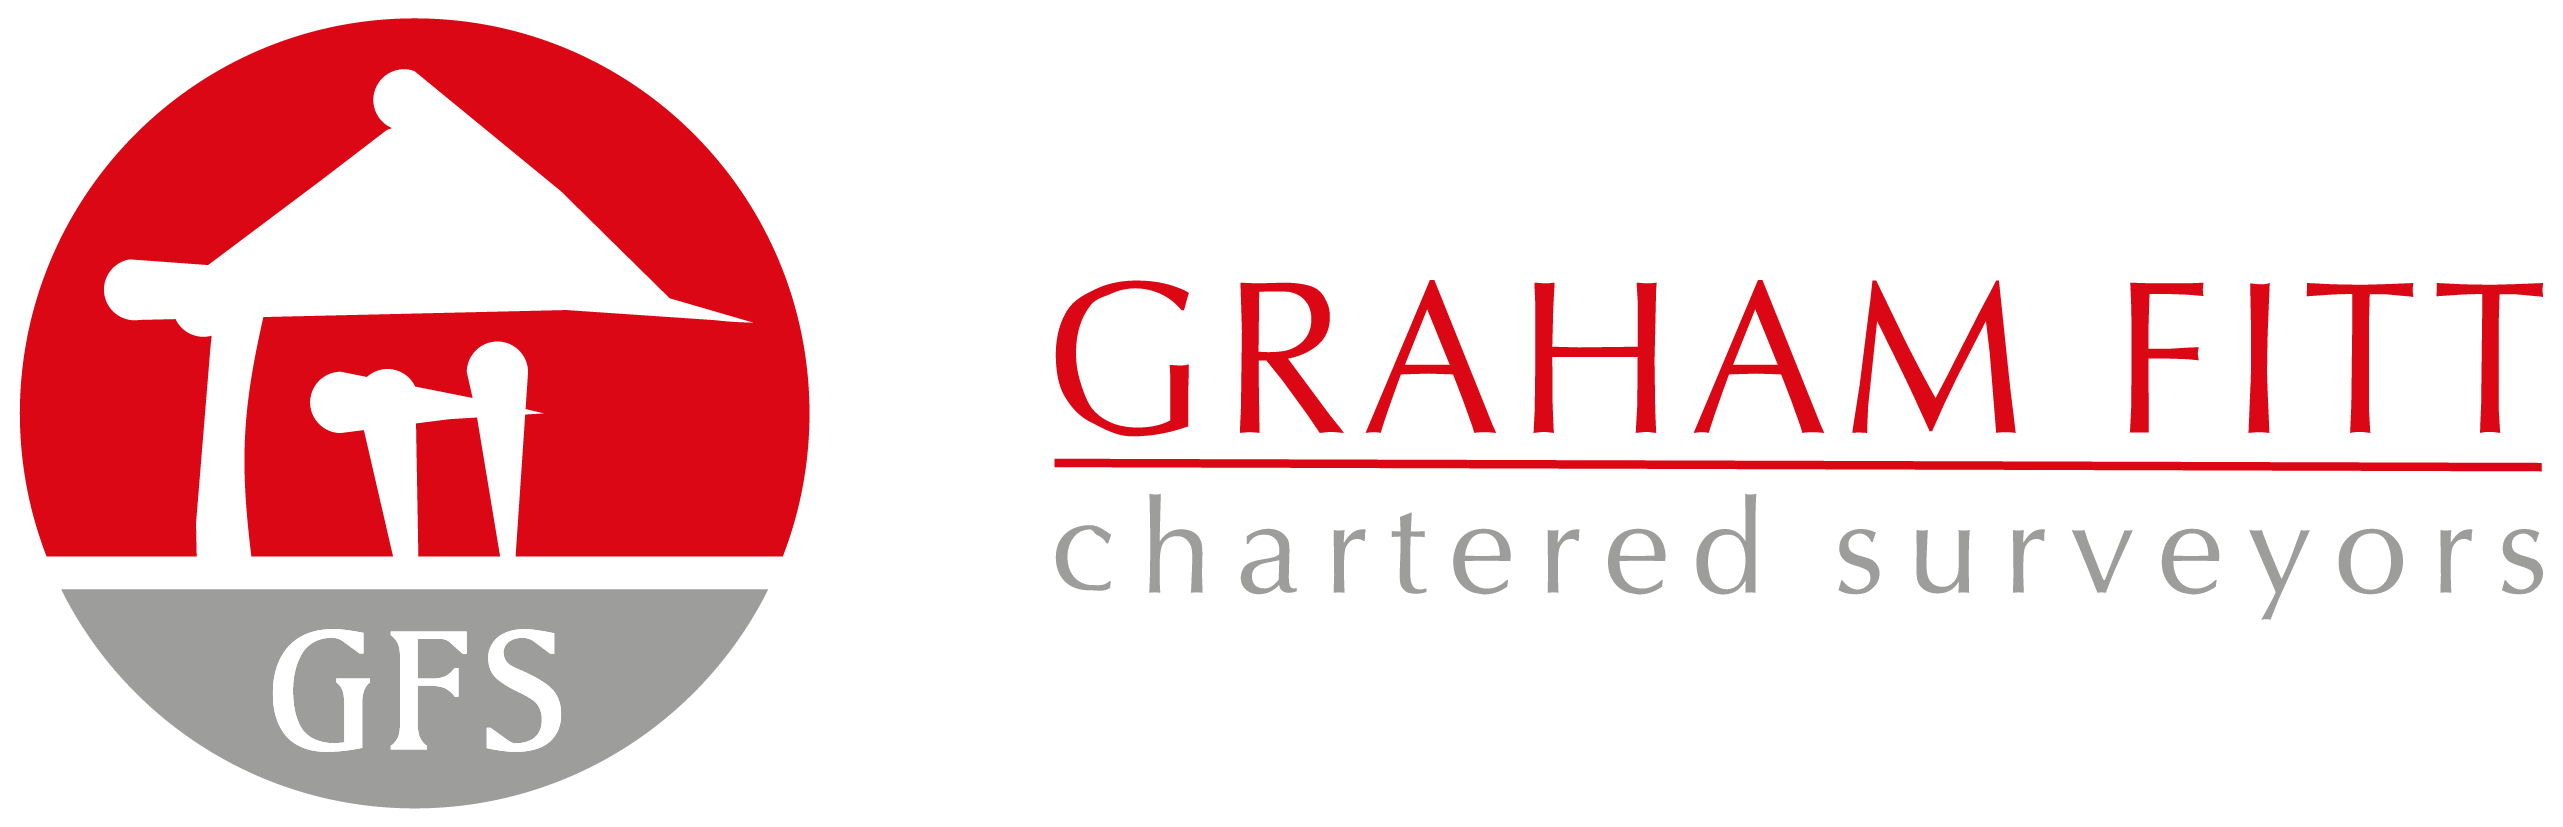 Graham Fitt Chartered Surveyors Text Logo